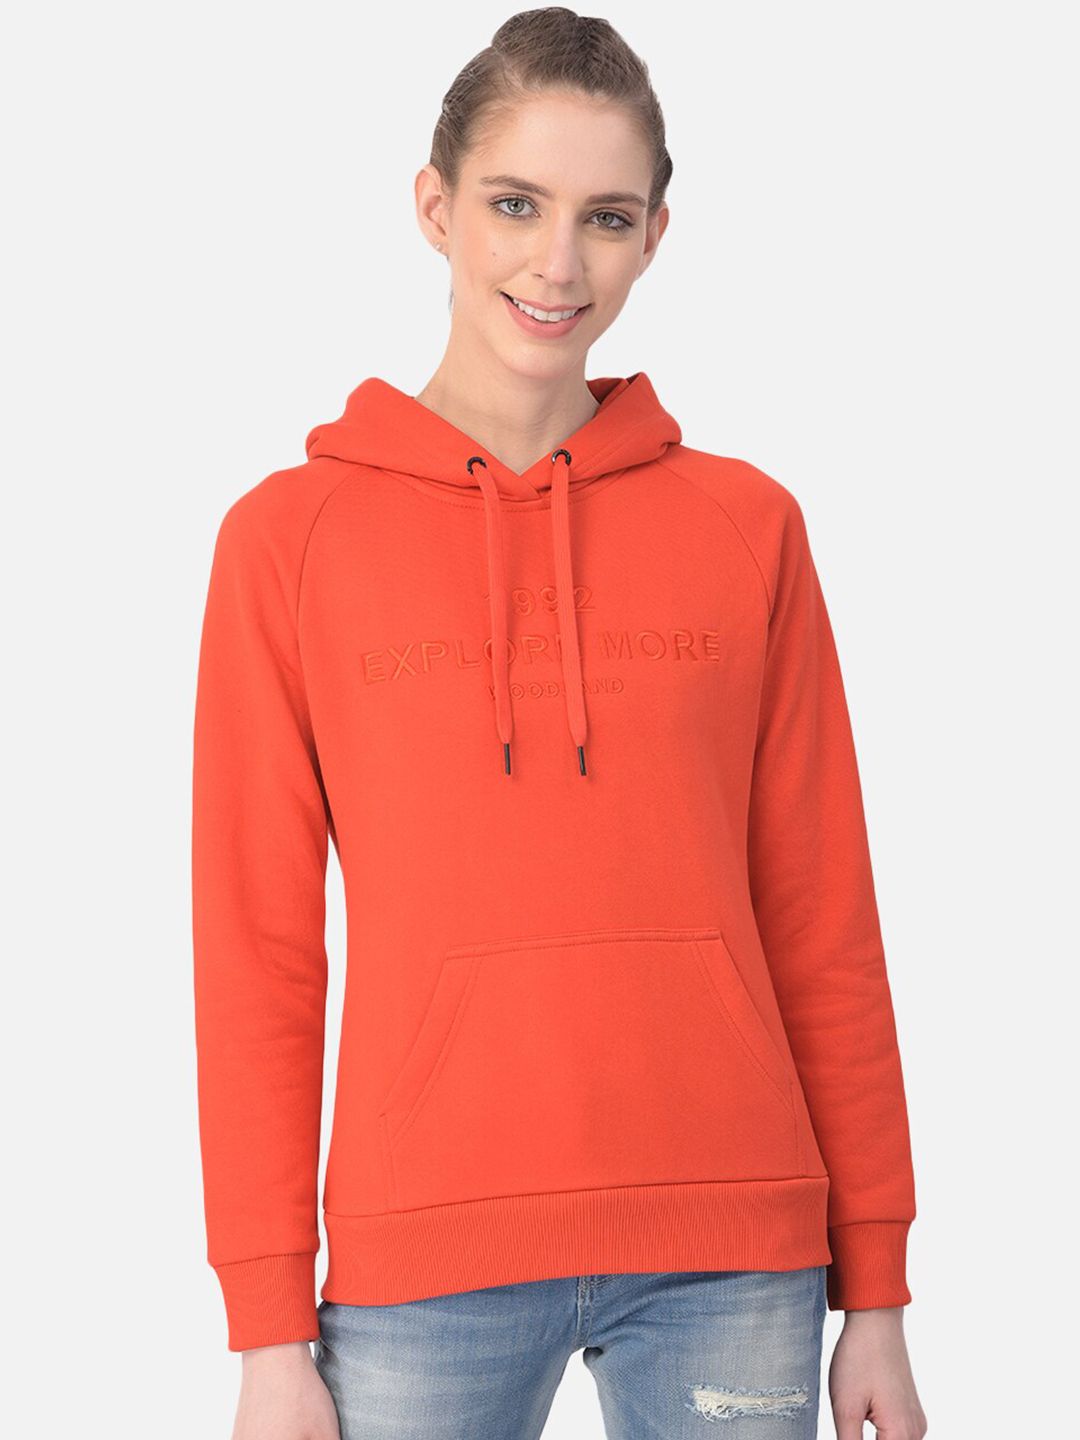 Woodland Women Red Typography Hooded Sweatshirt Price in India